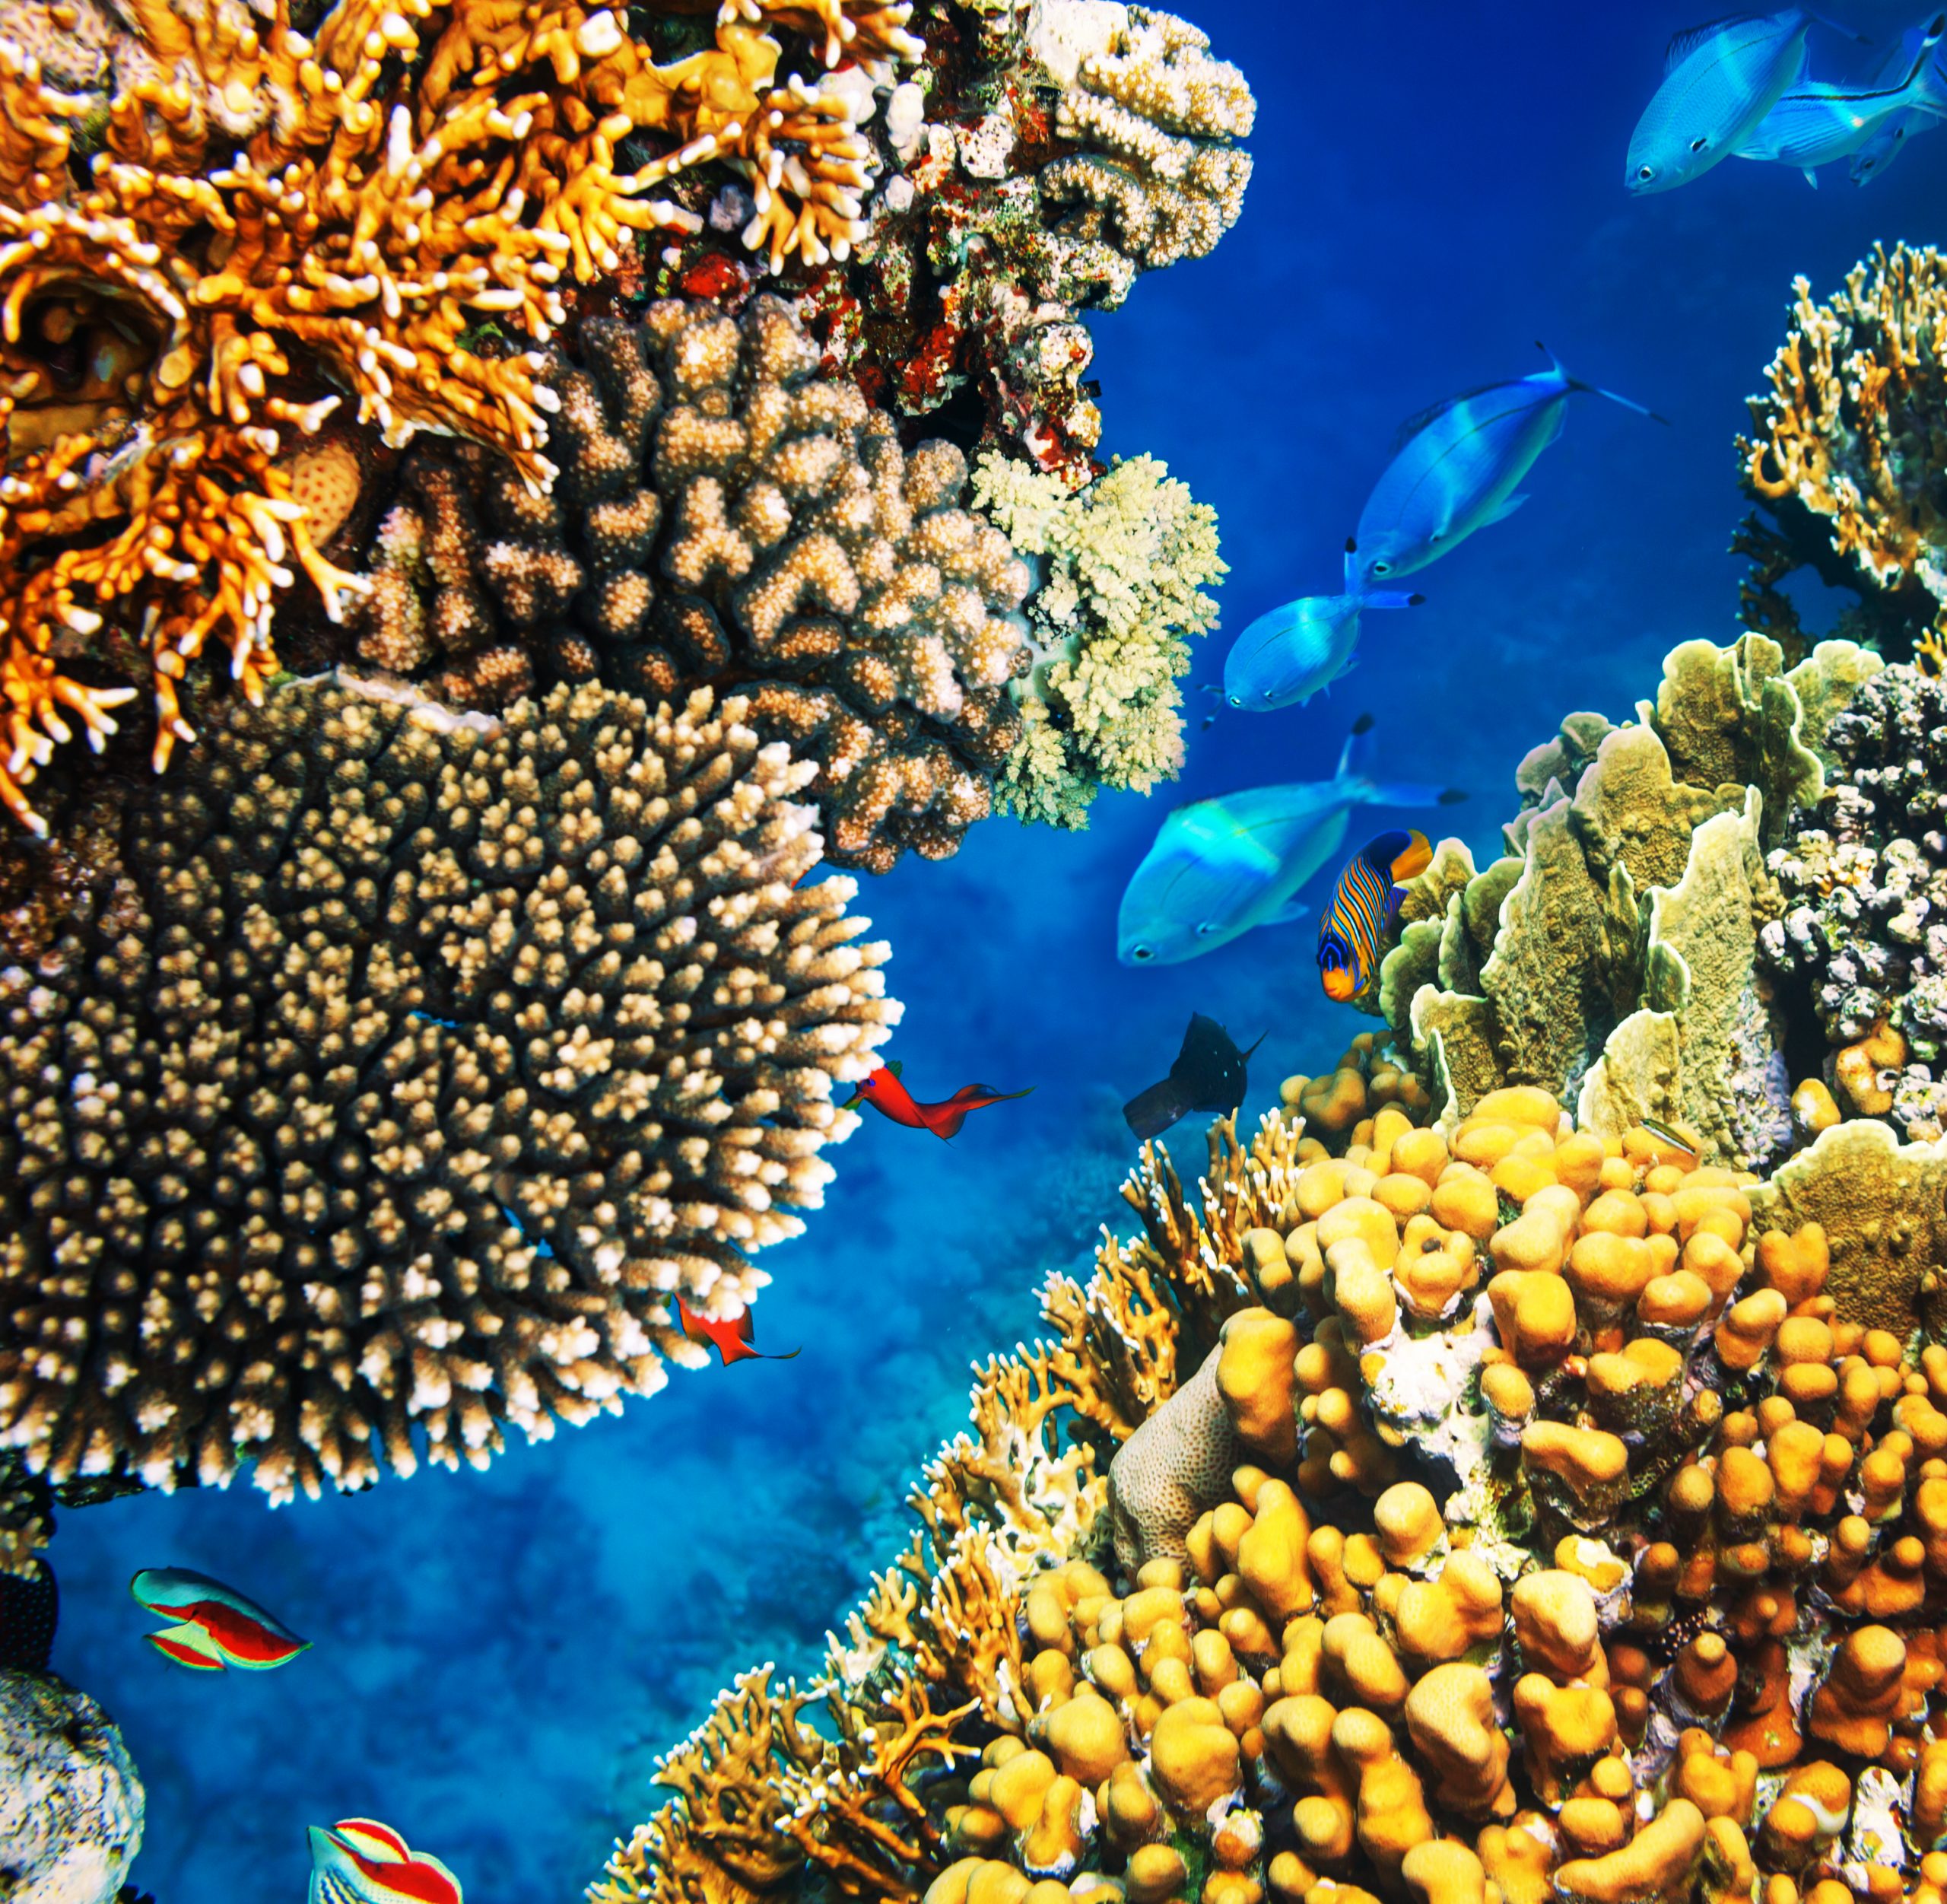 Euronews: Qatar is Saving the coral reefs